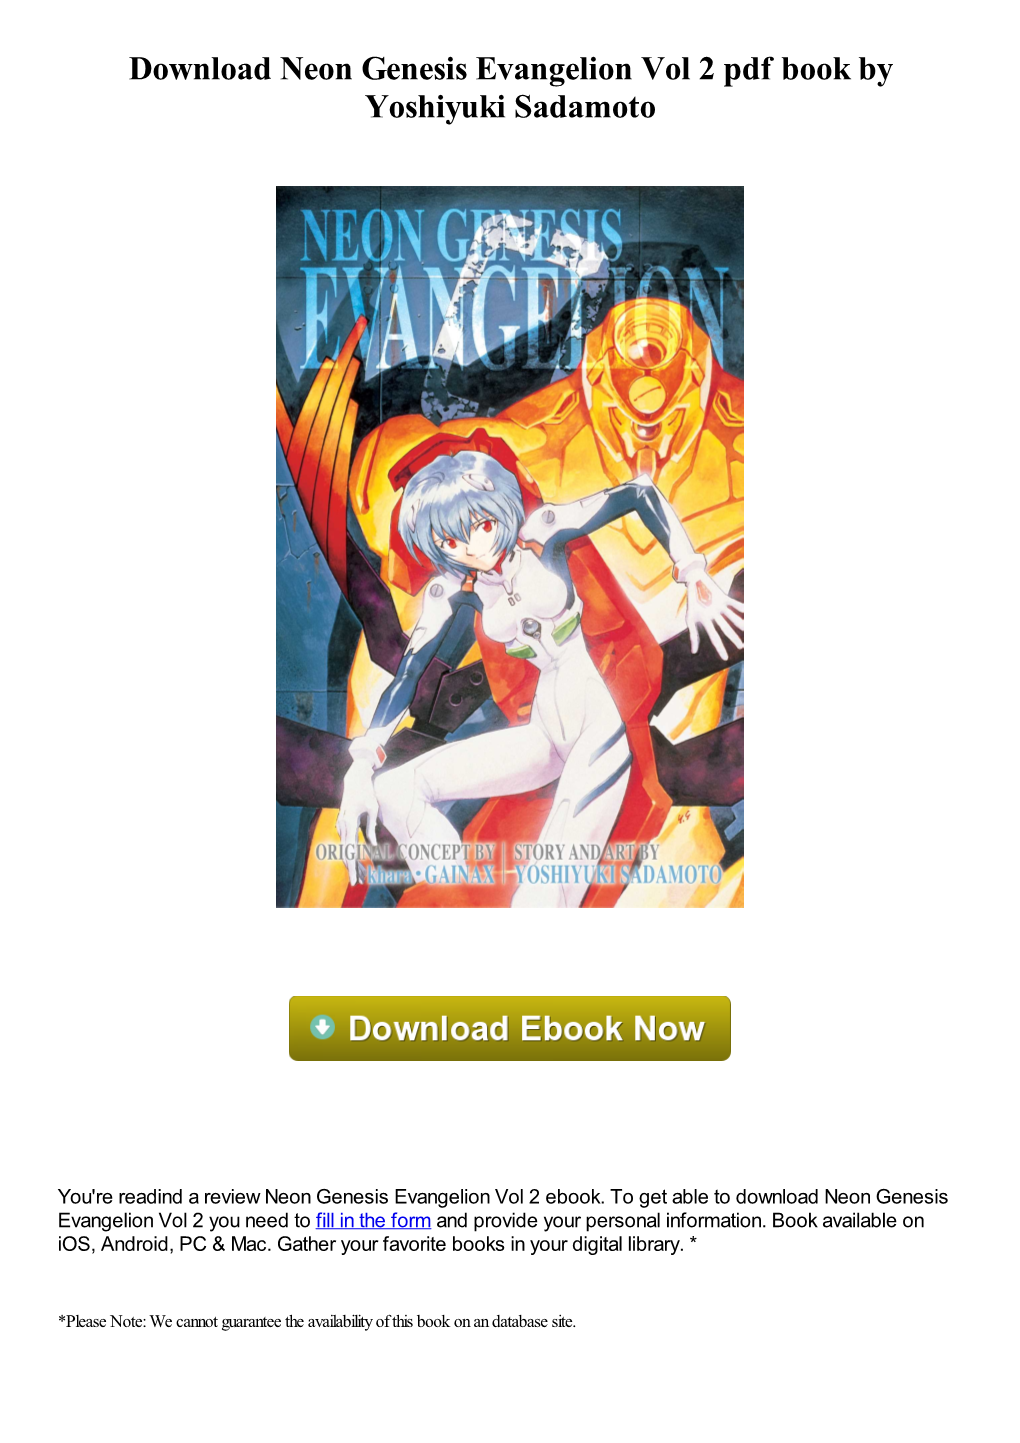 Download Neon Genesis Evangelion Vol 2 Pdf Ebook by Yoshiyuki